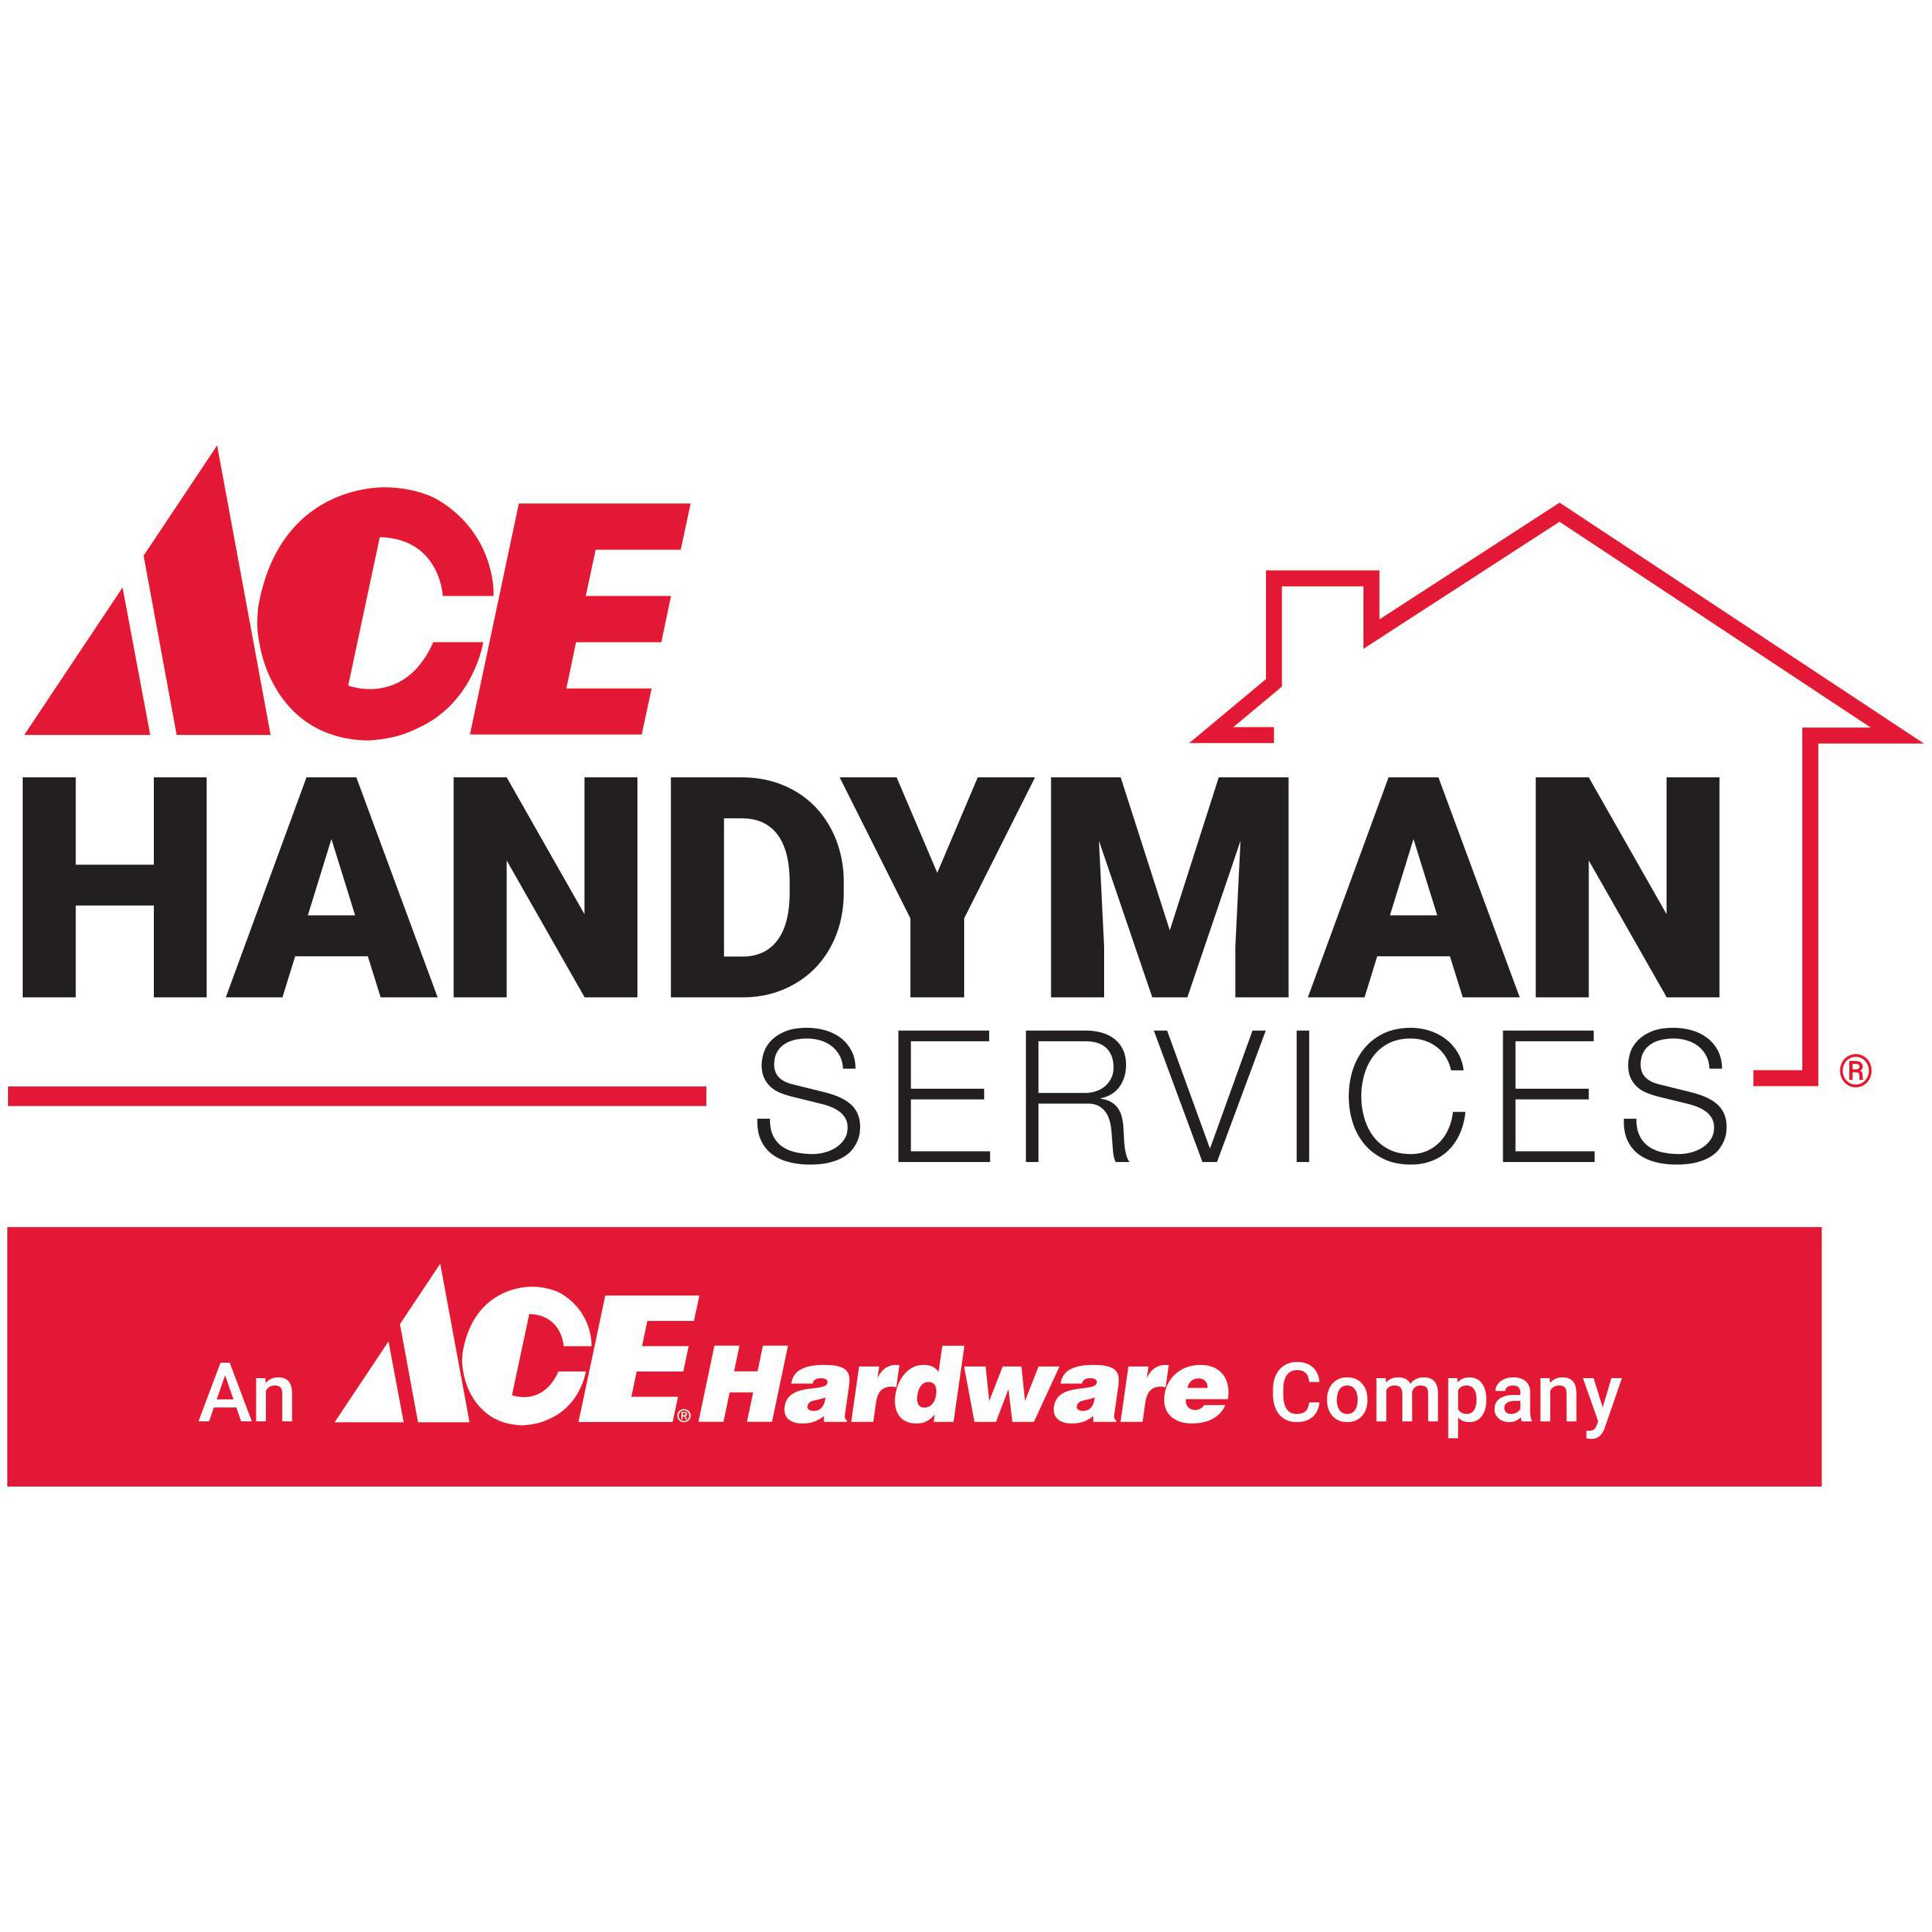 Ace Handyman Services Santa Monica - Los Angeles, CA 90025 - (424)257-1742 | ShowMeLocal.com